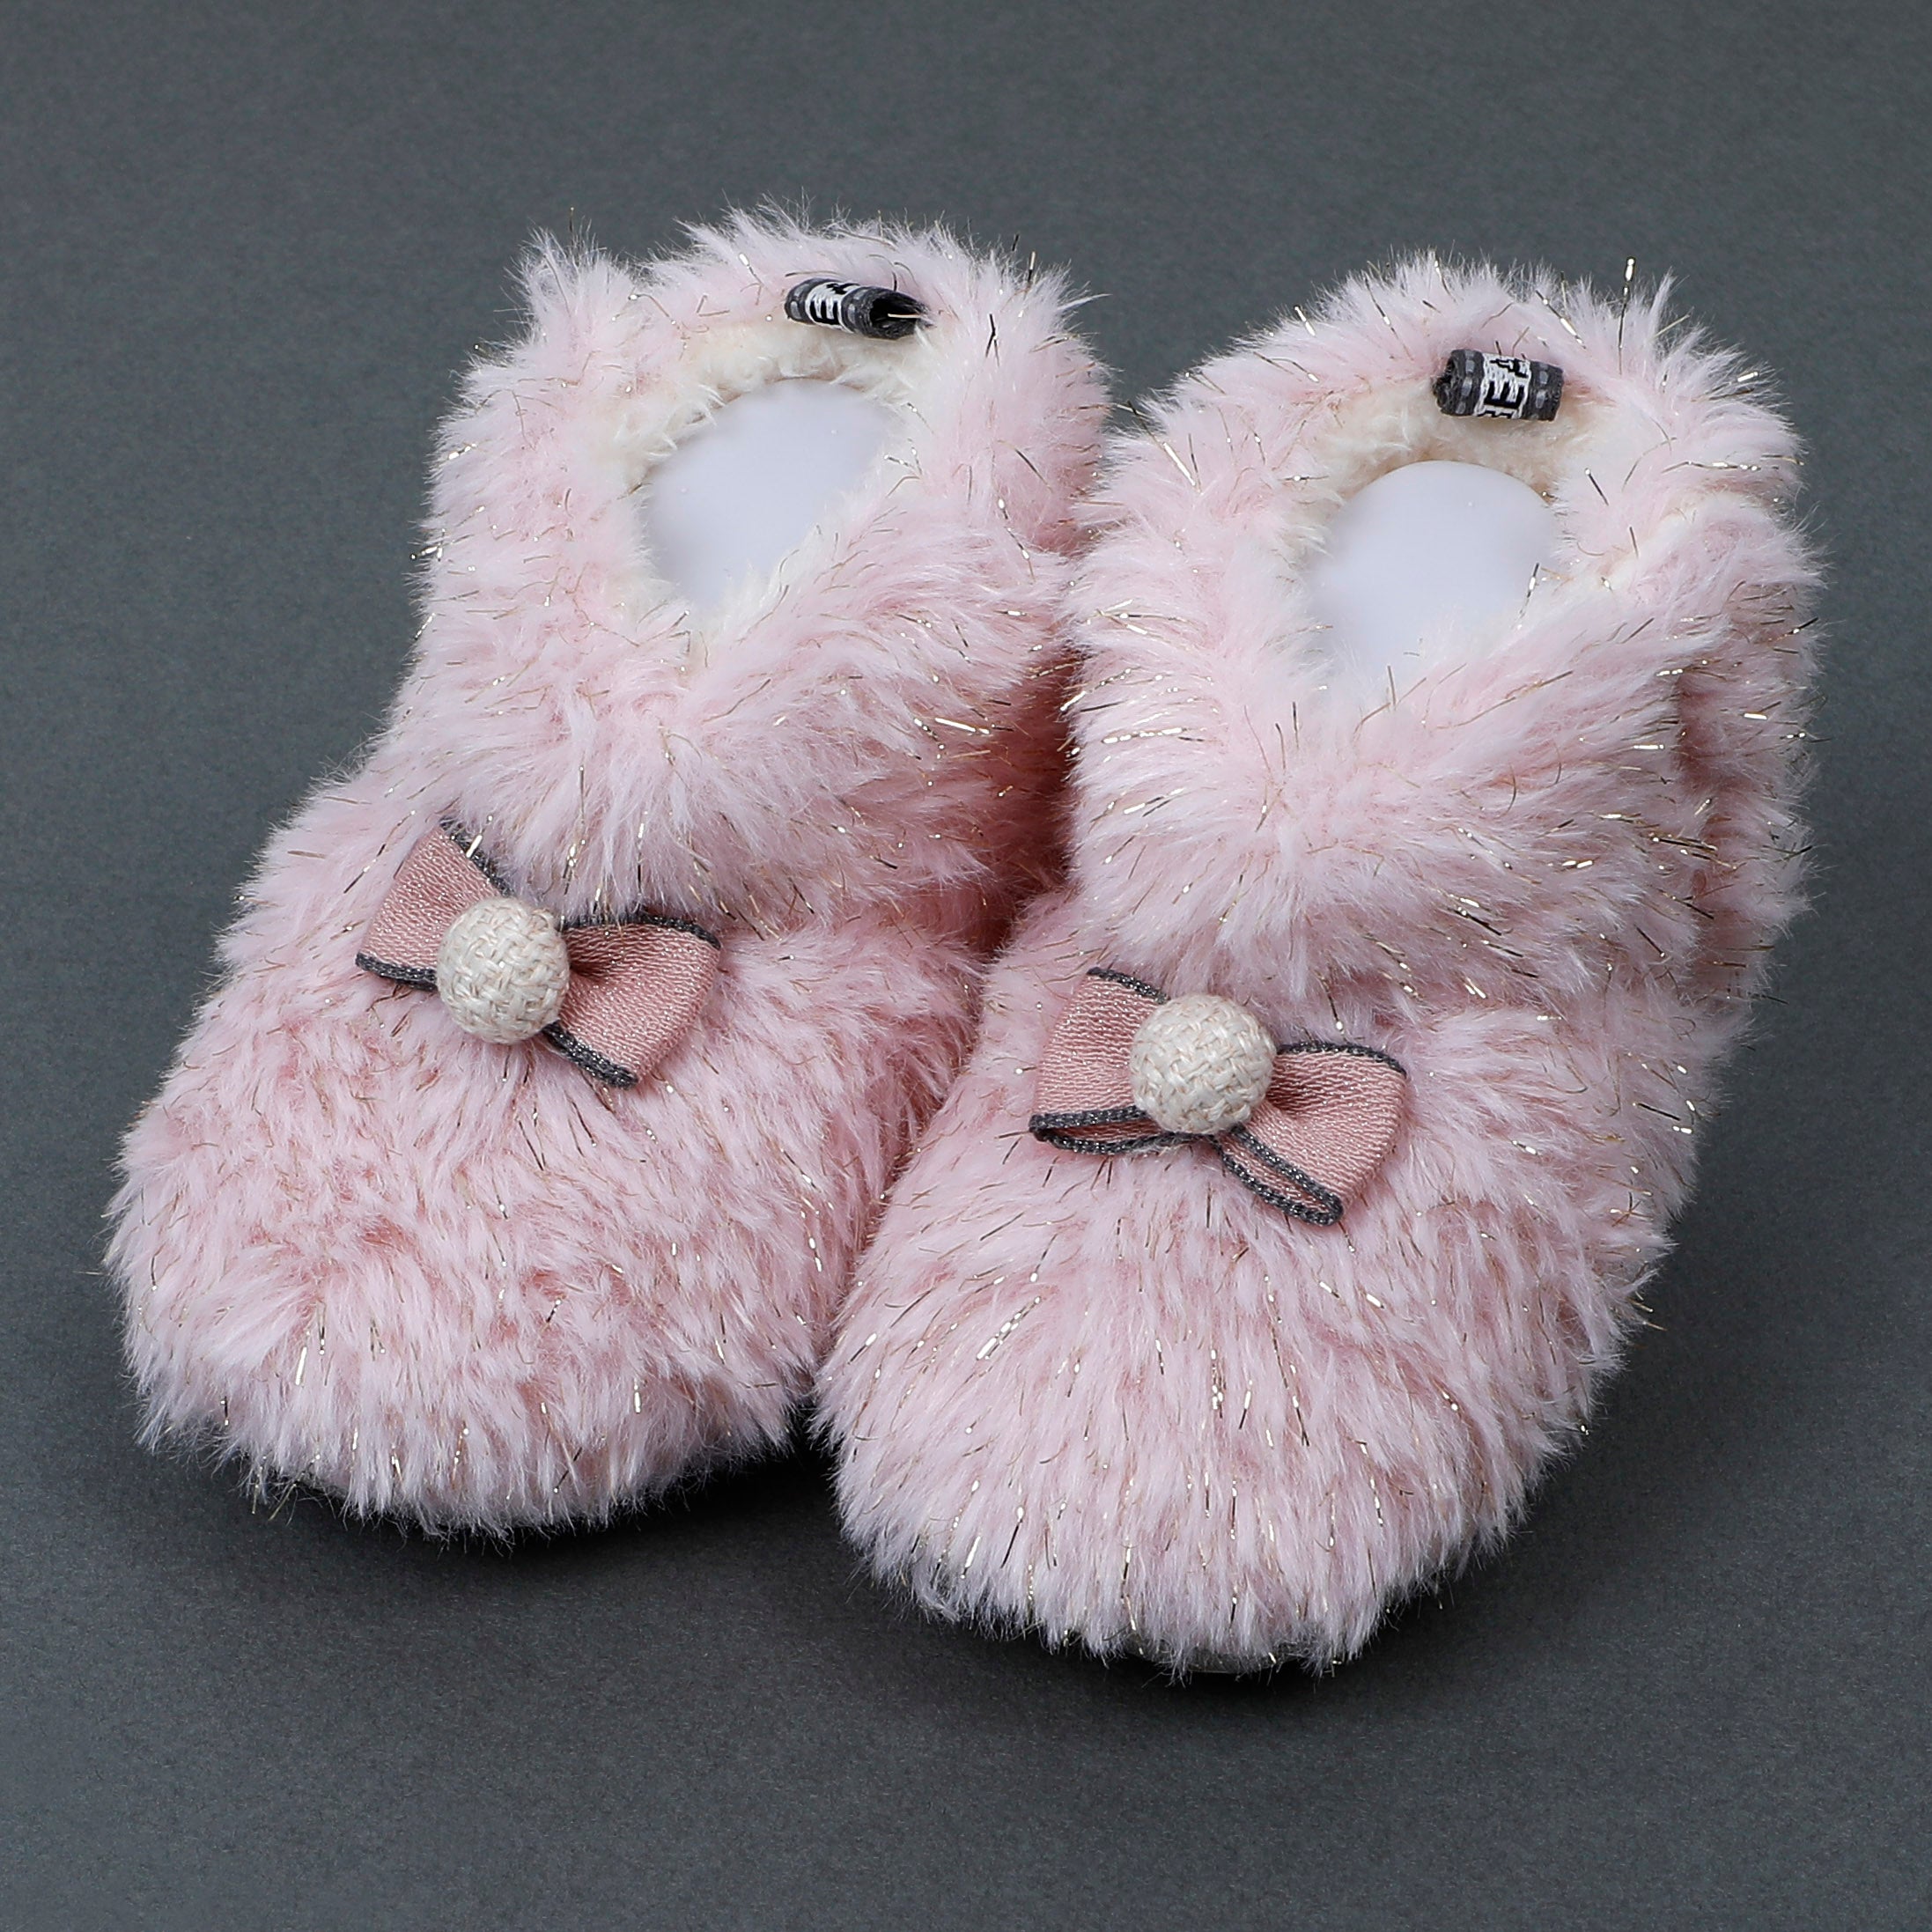 Baby Moo Papa's Angel Velcro Warm Furry Booties - Pink - Baby Moo